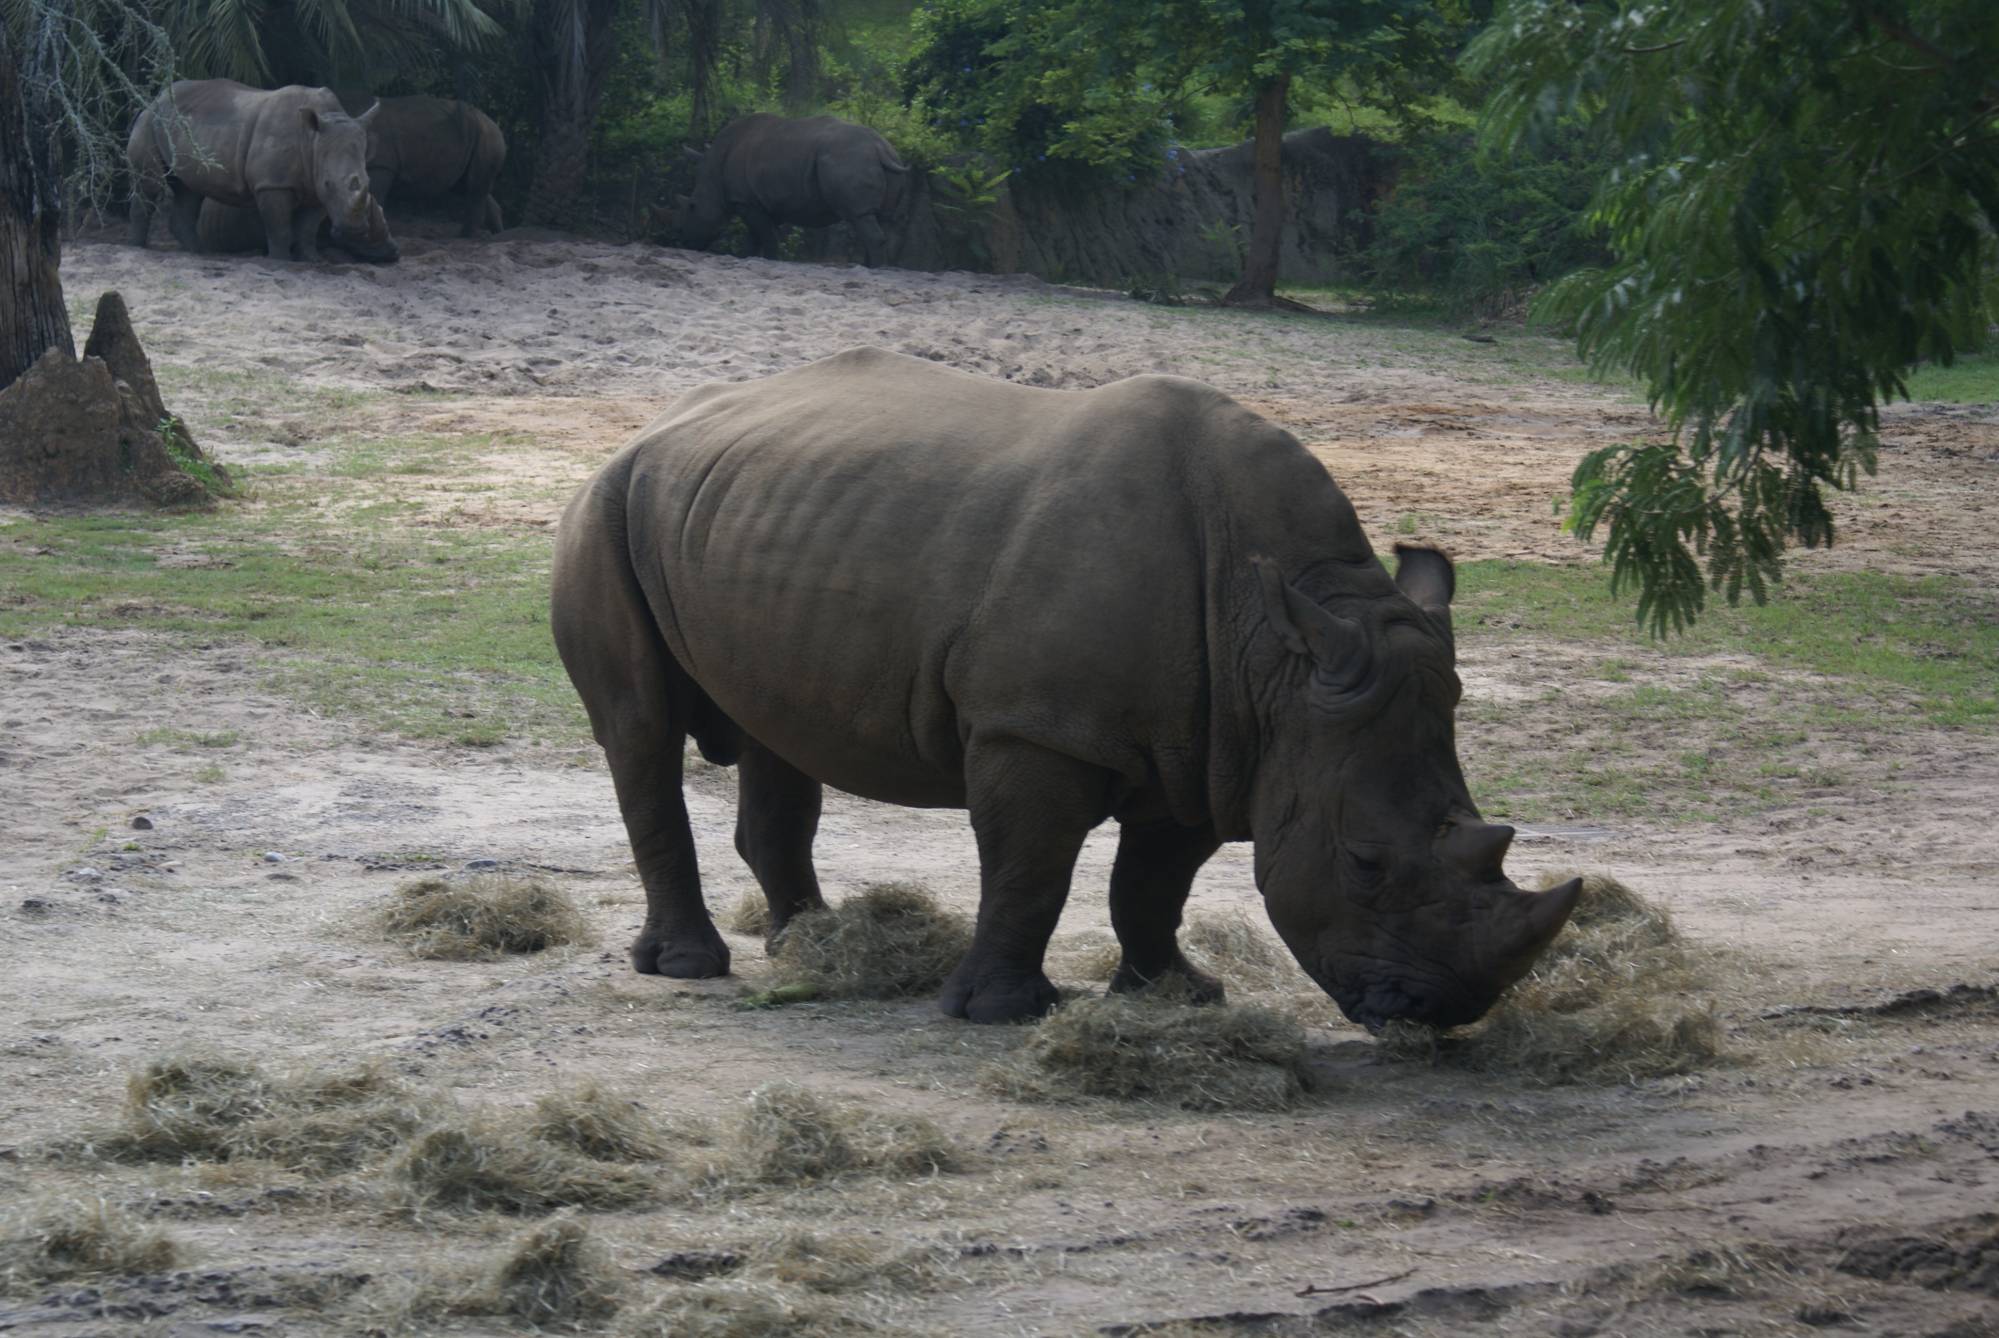 Rhinos are big